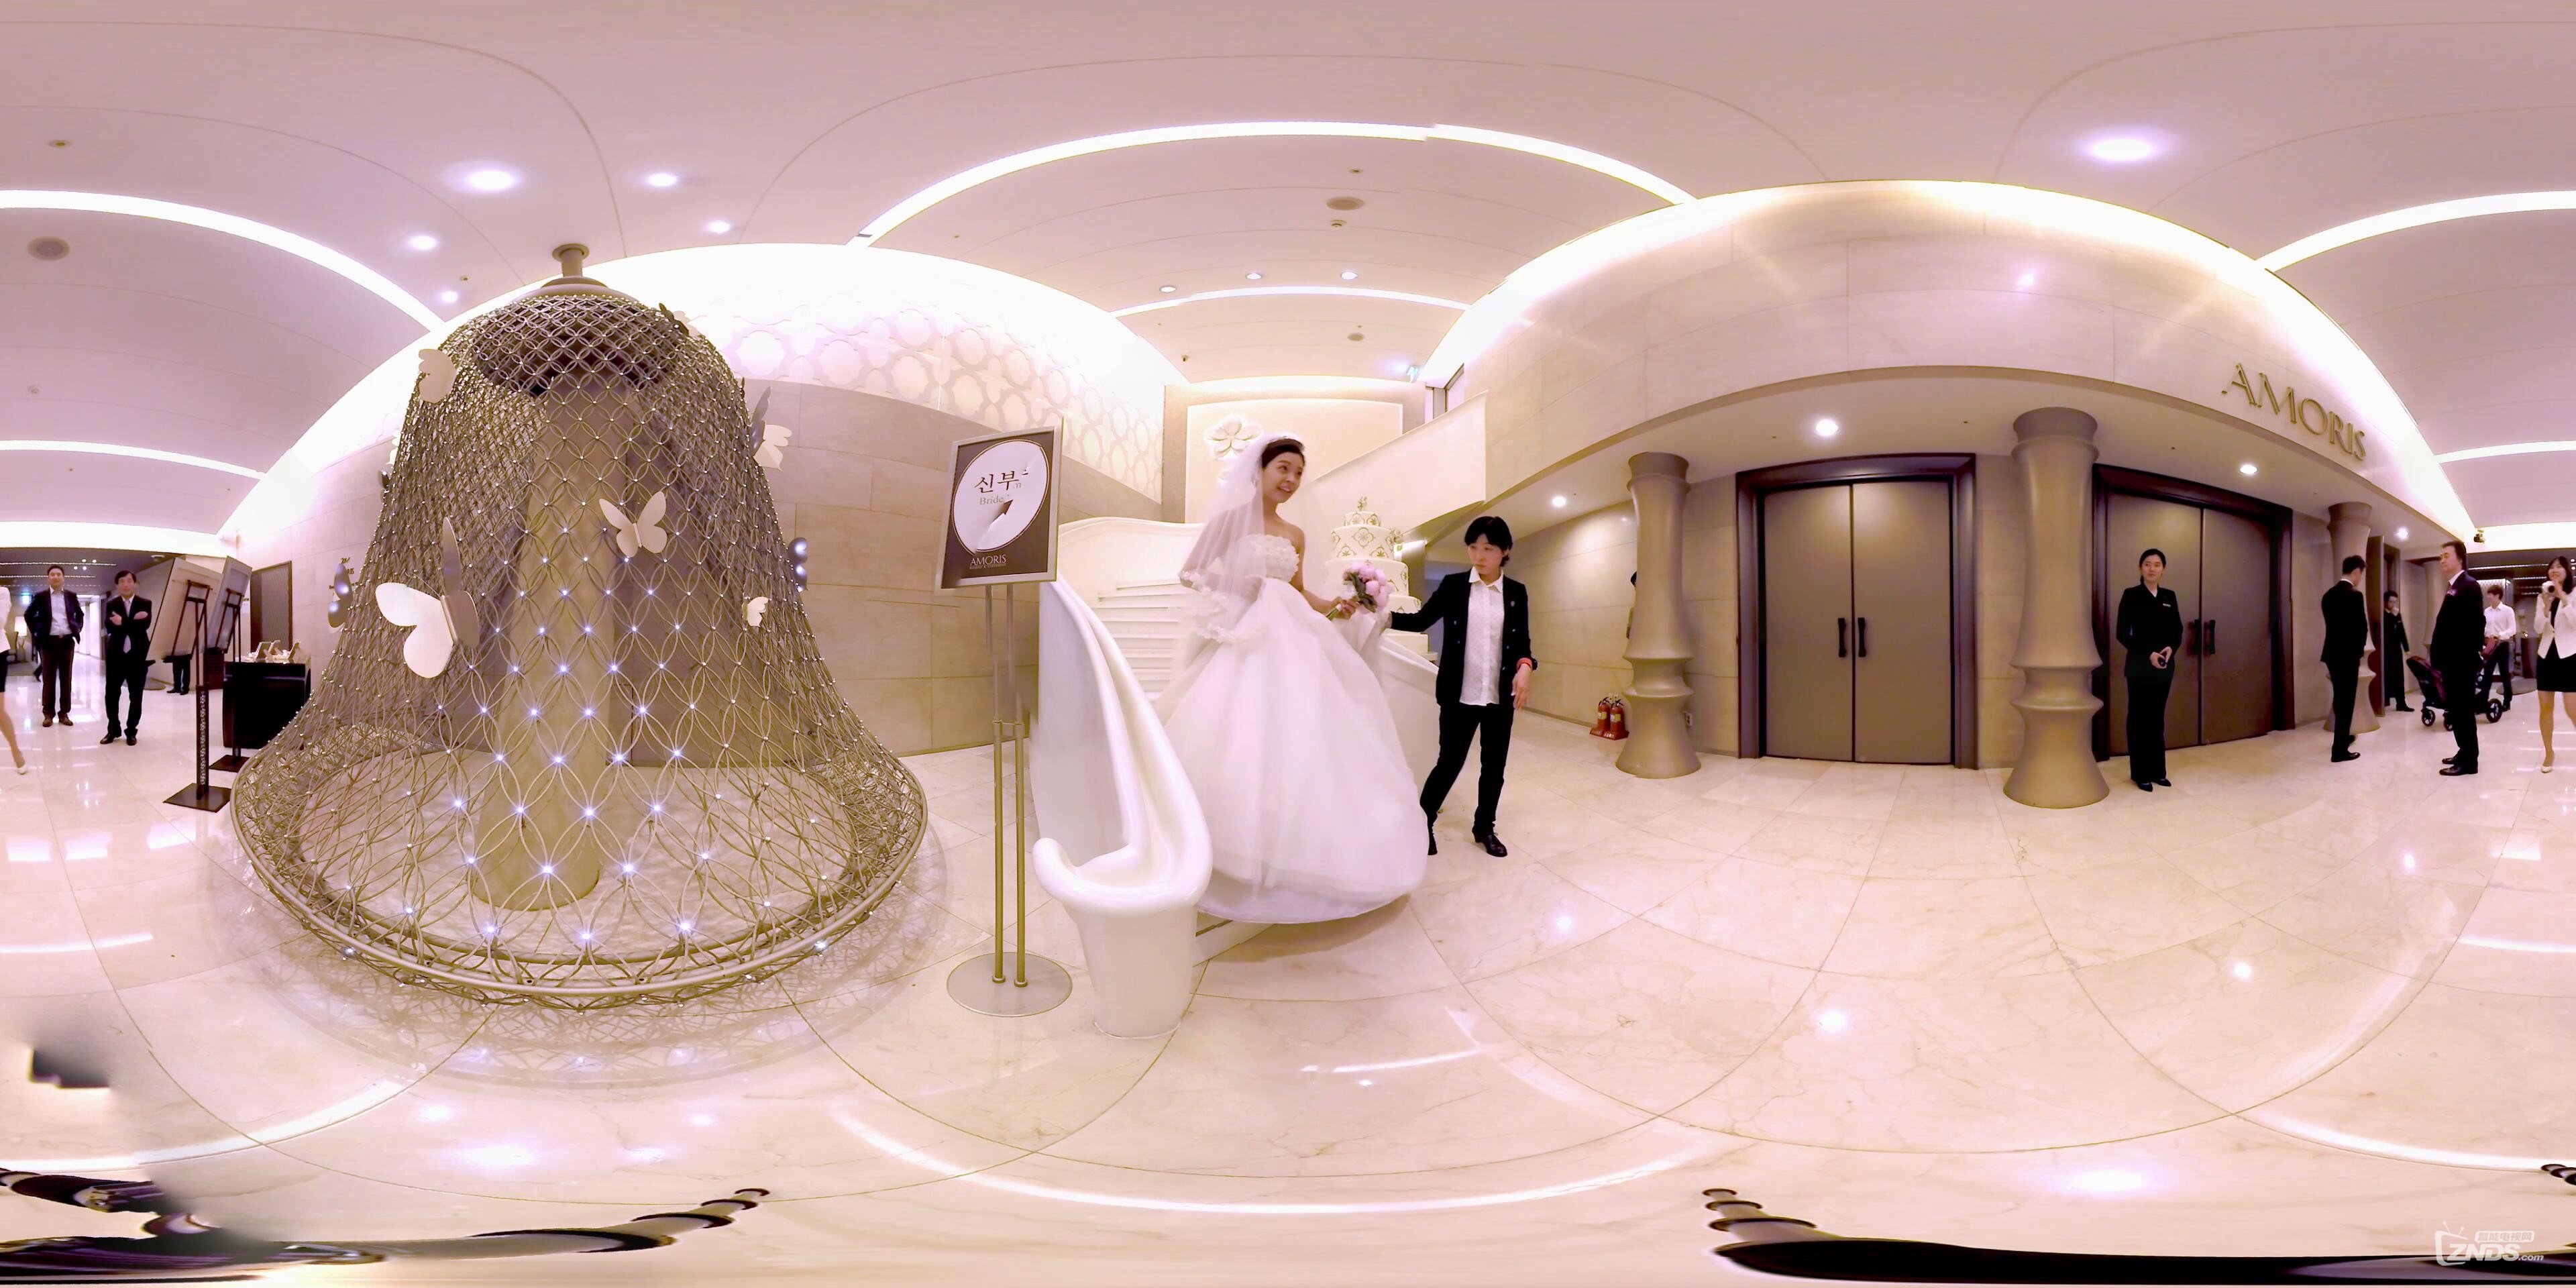 【360度VR全景视频】前往婚礼现场_VR视频下